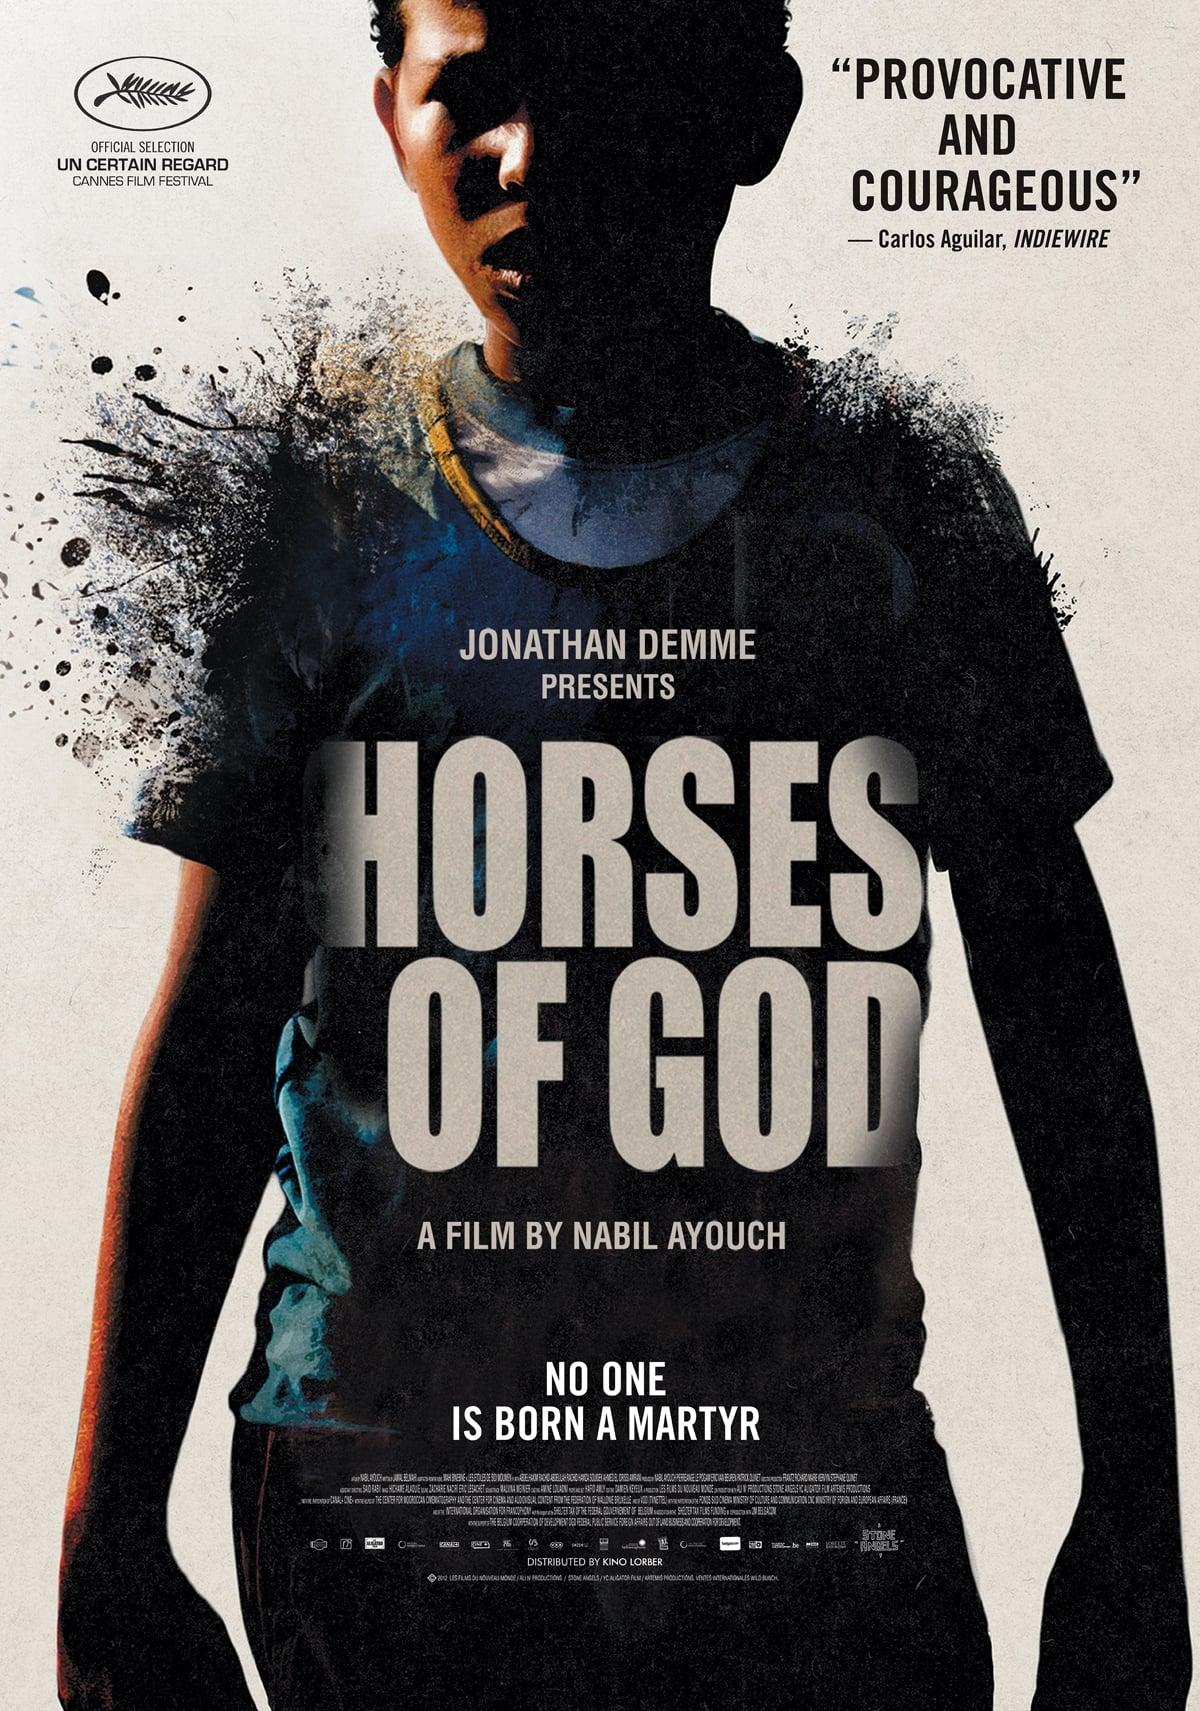 Horses of God poster